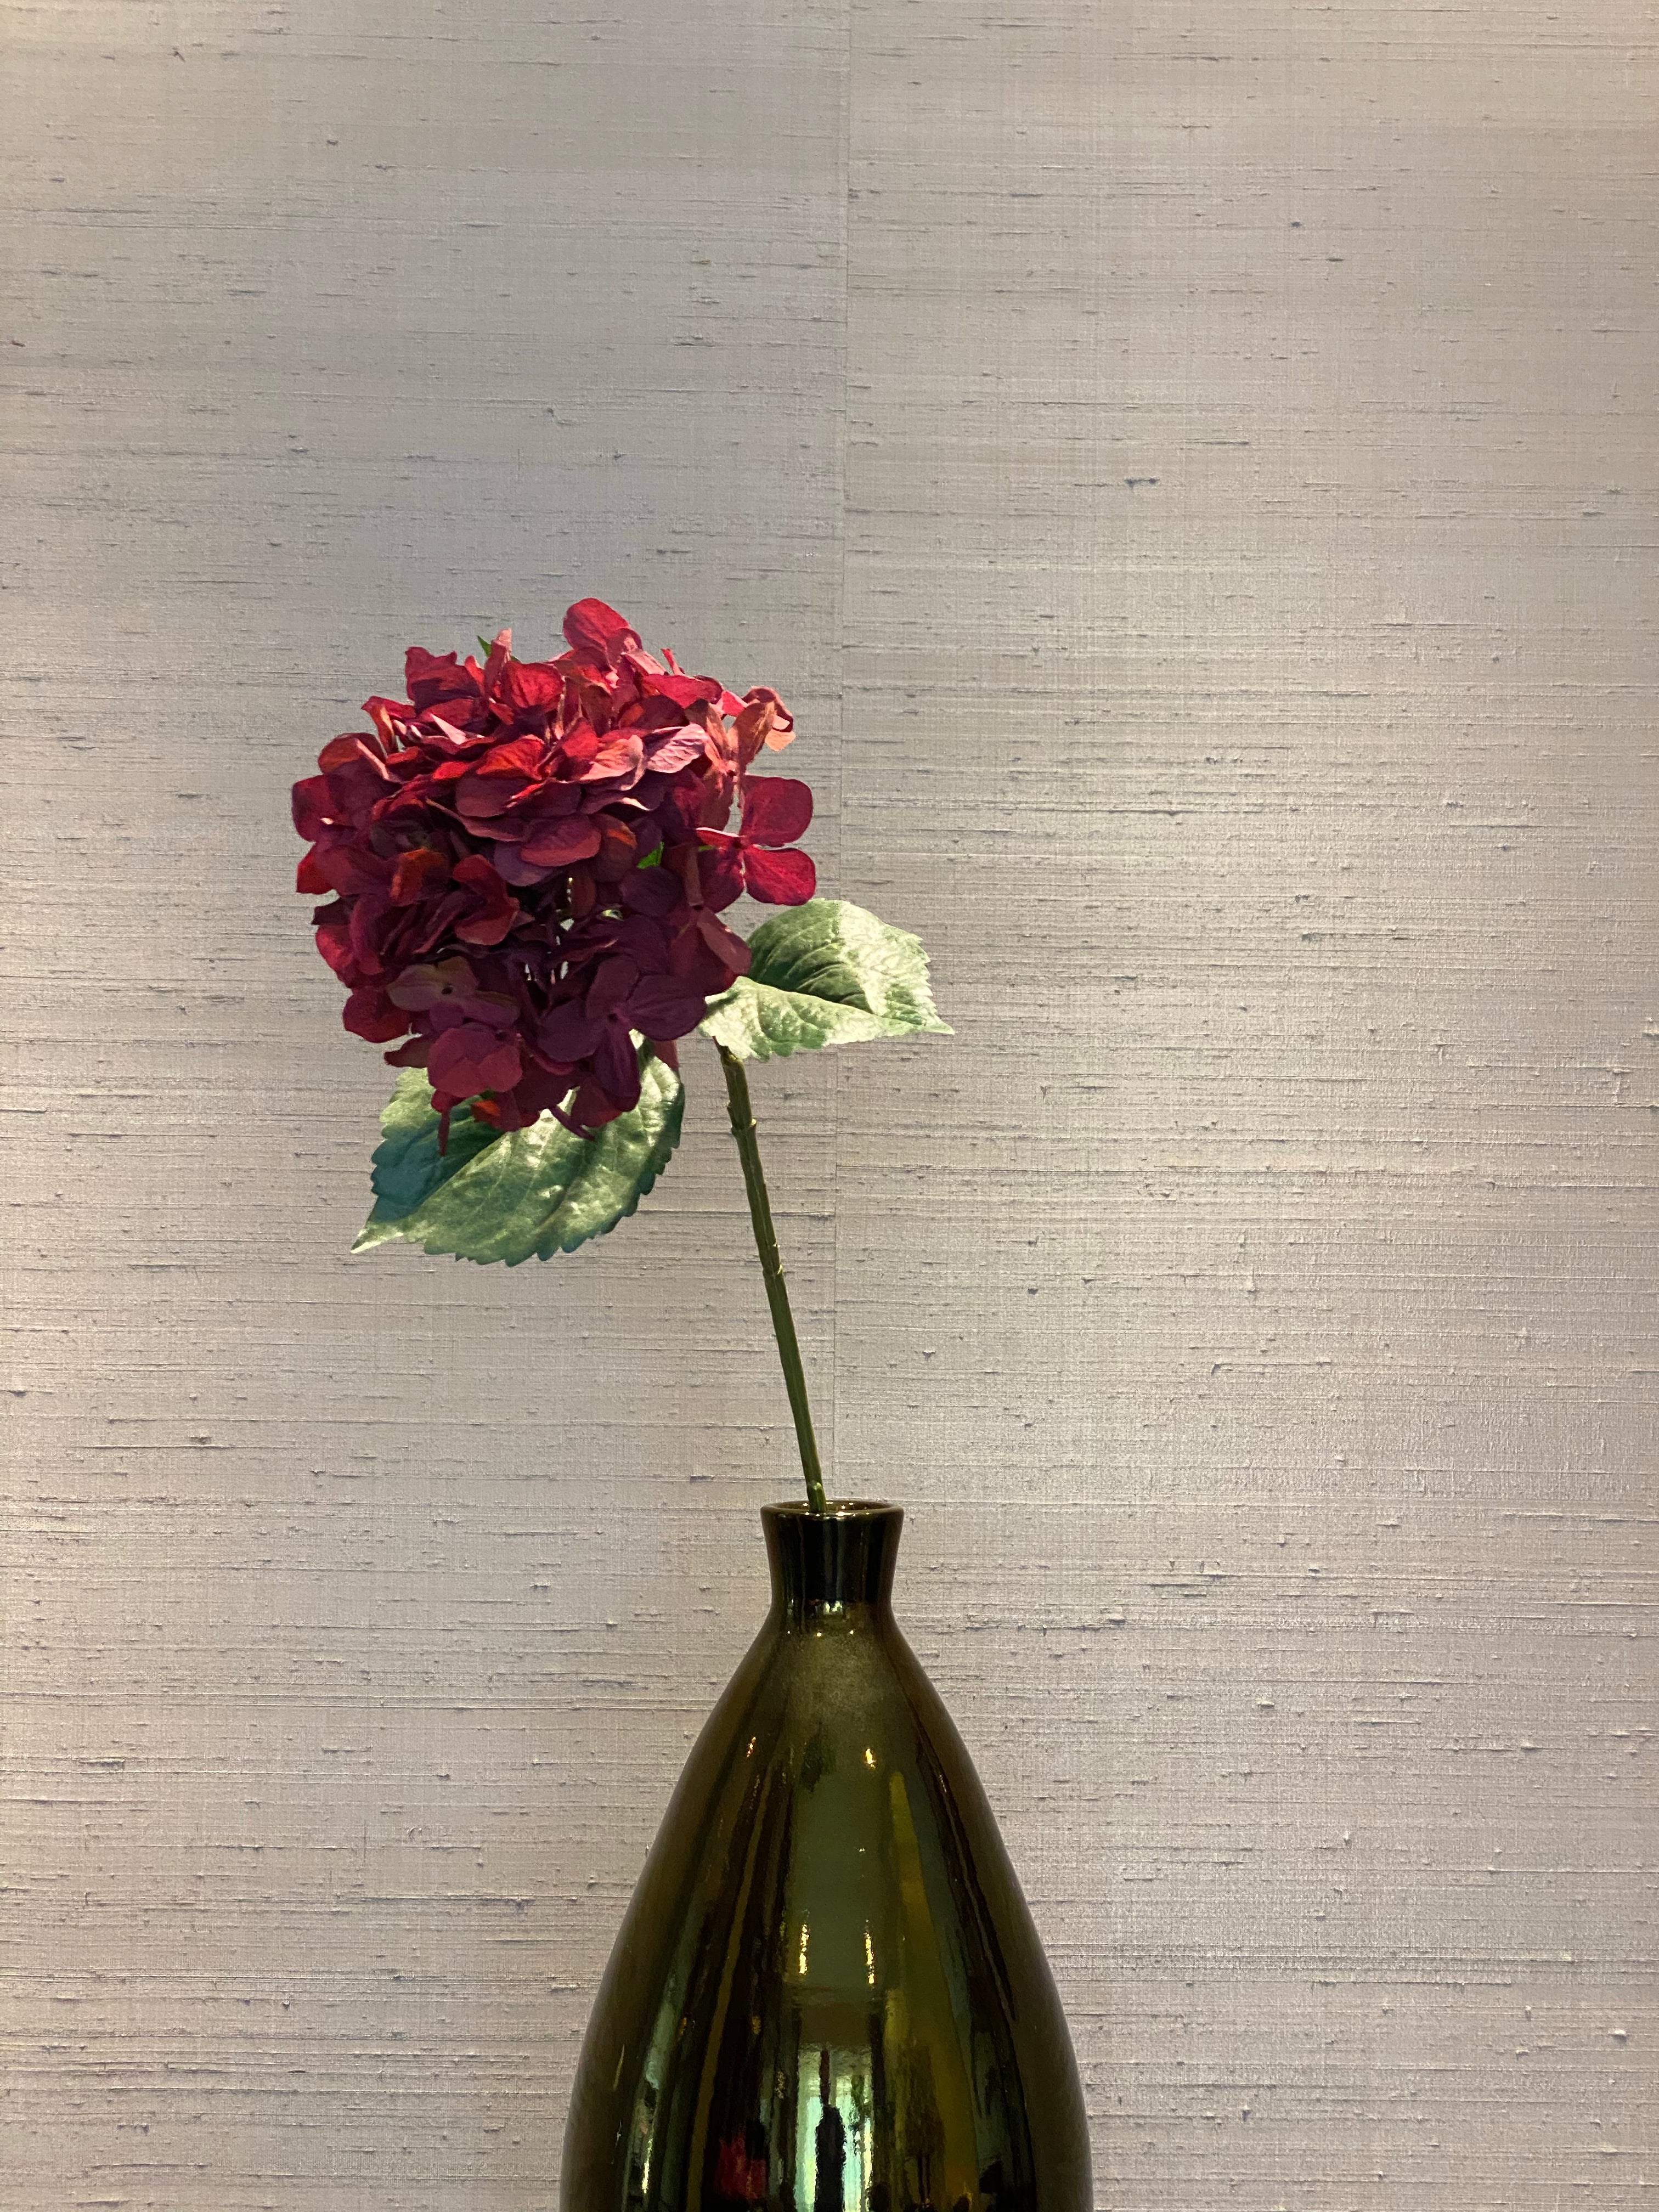 Hortensia Aubergine Kleurig / Hydrangea Eggplant Colored - Kunst / Artificial